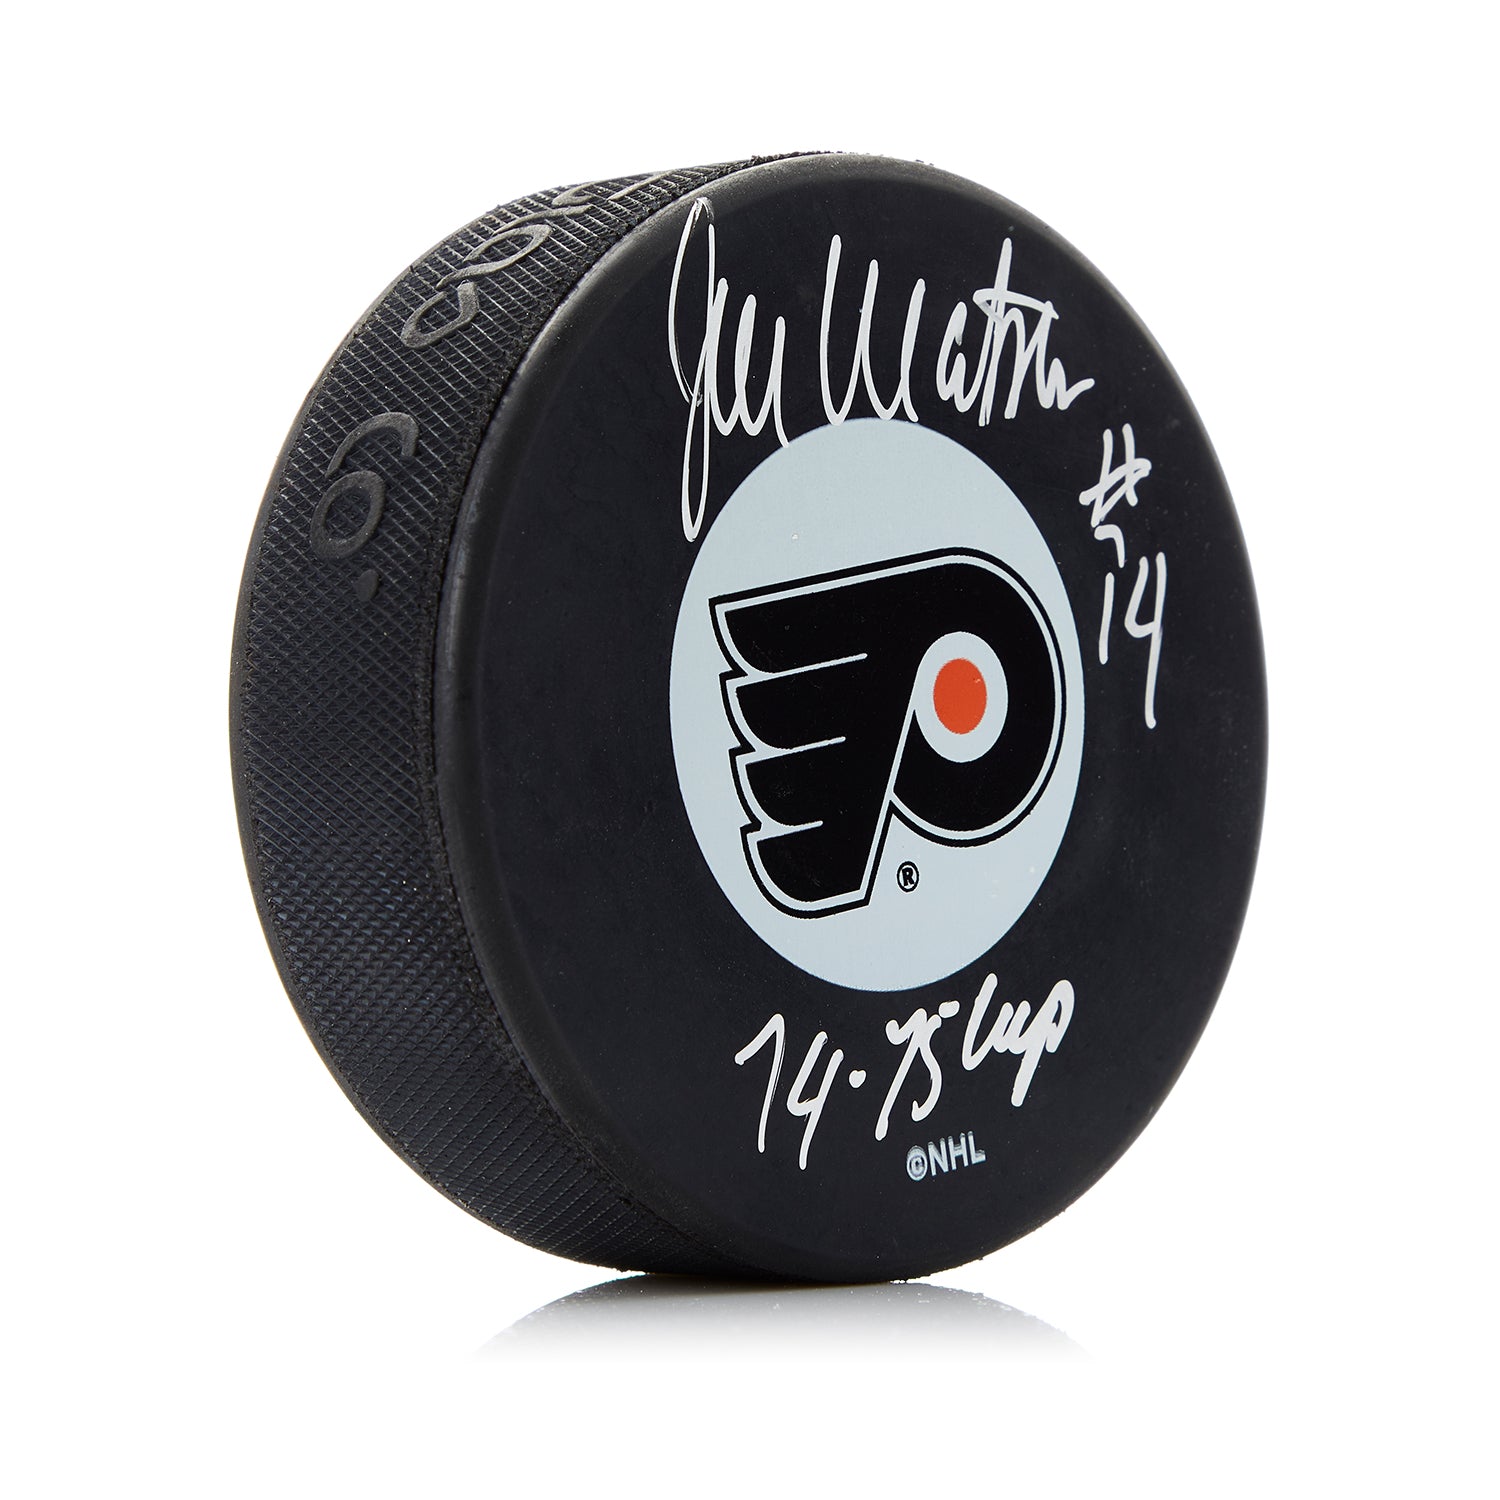 Joe Watson Signed Philadelphia Flyers Puck with Stanley Cup Note